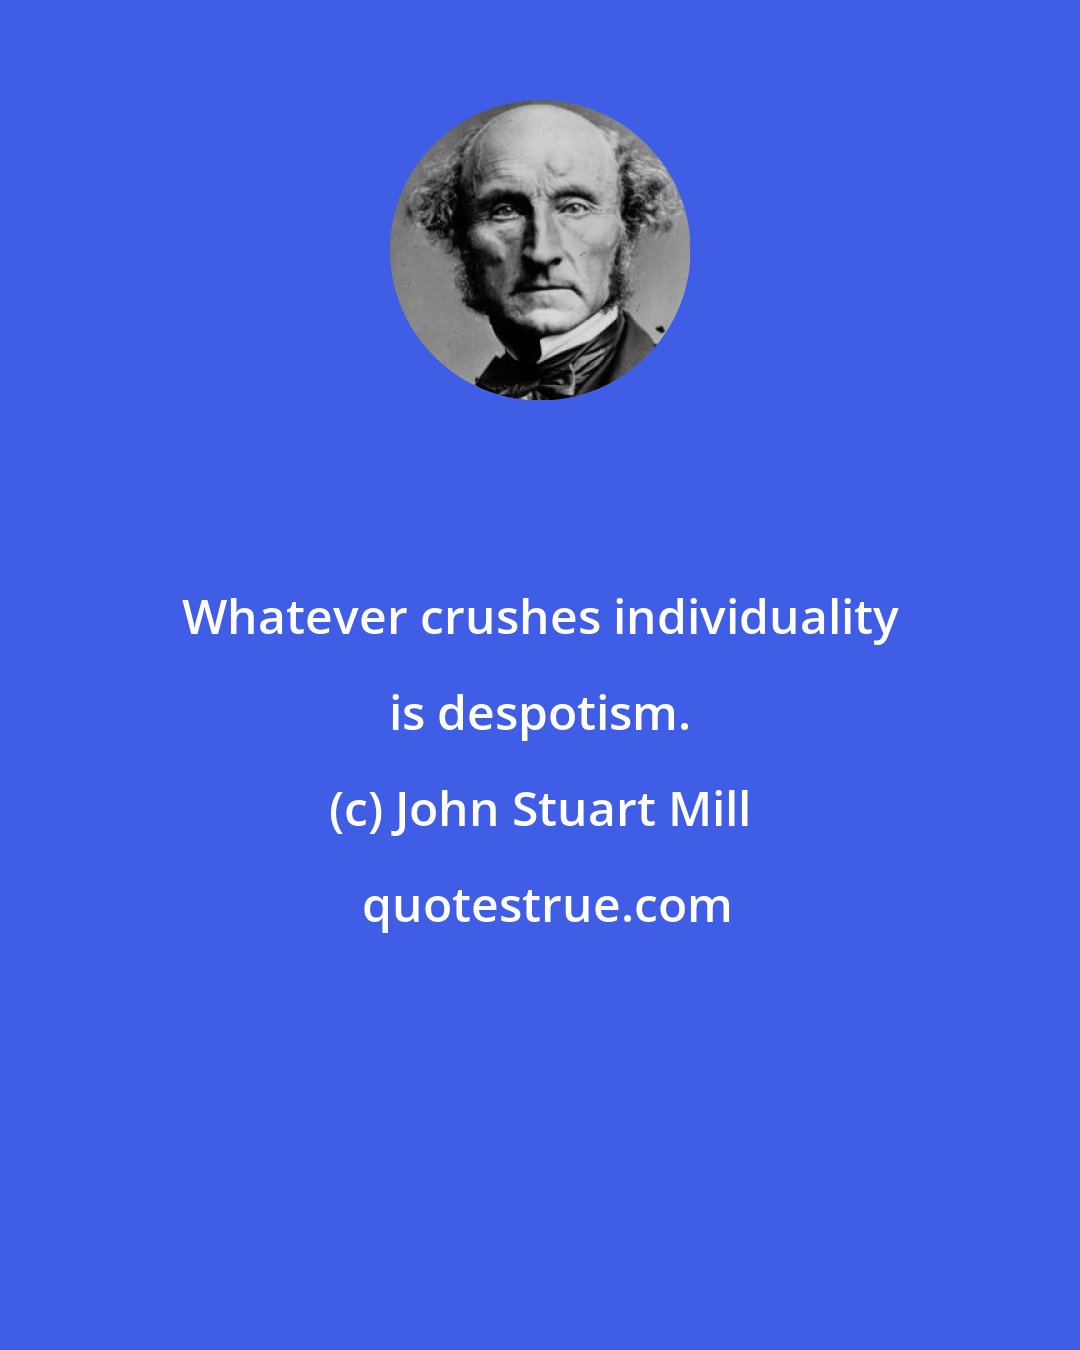 John Stuart Mill: Whatever crushes individuality is despotism.